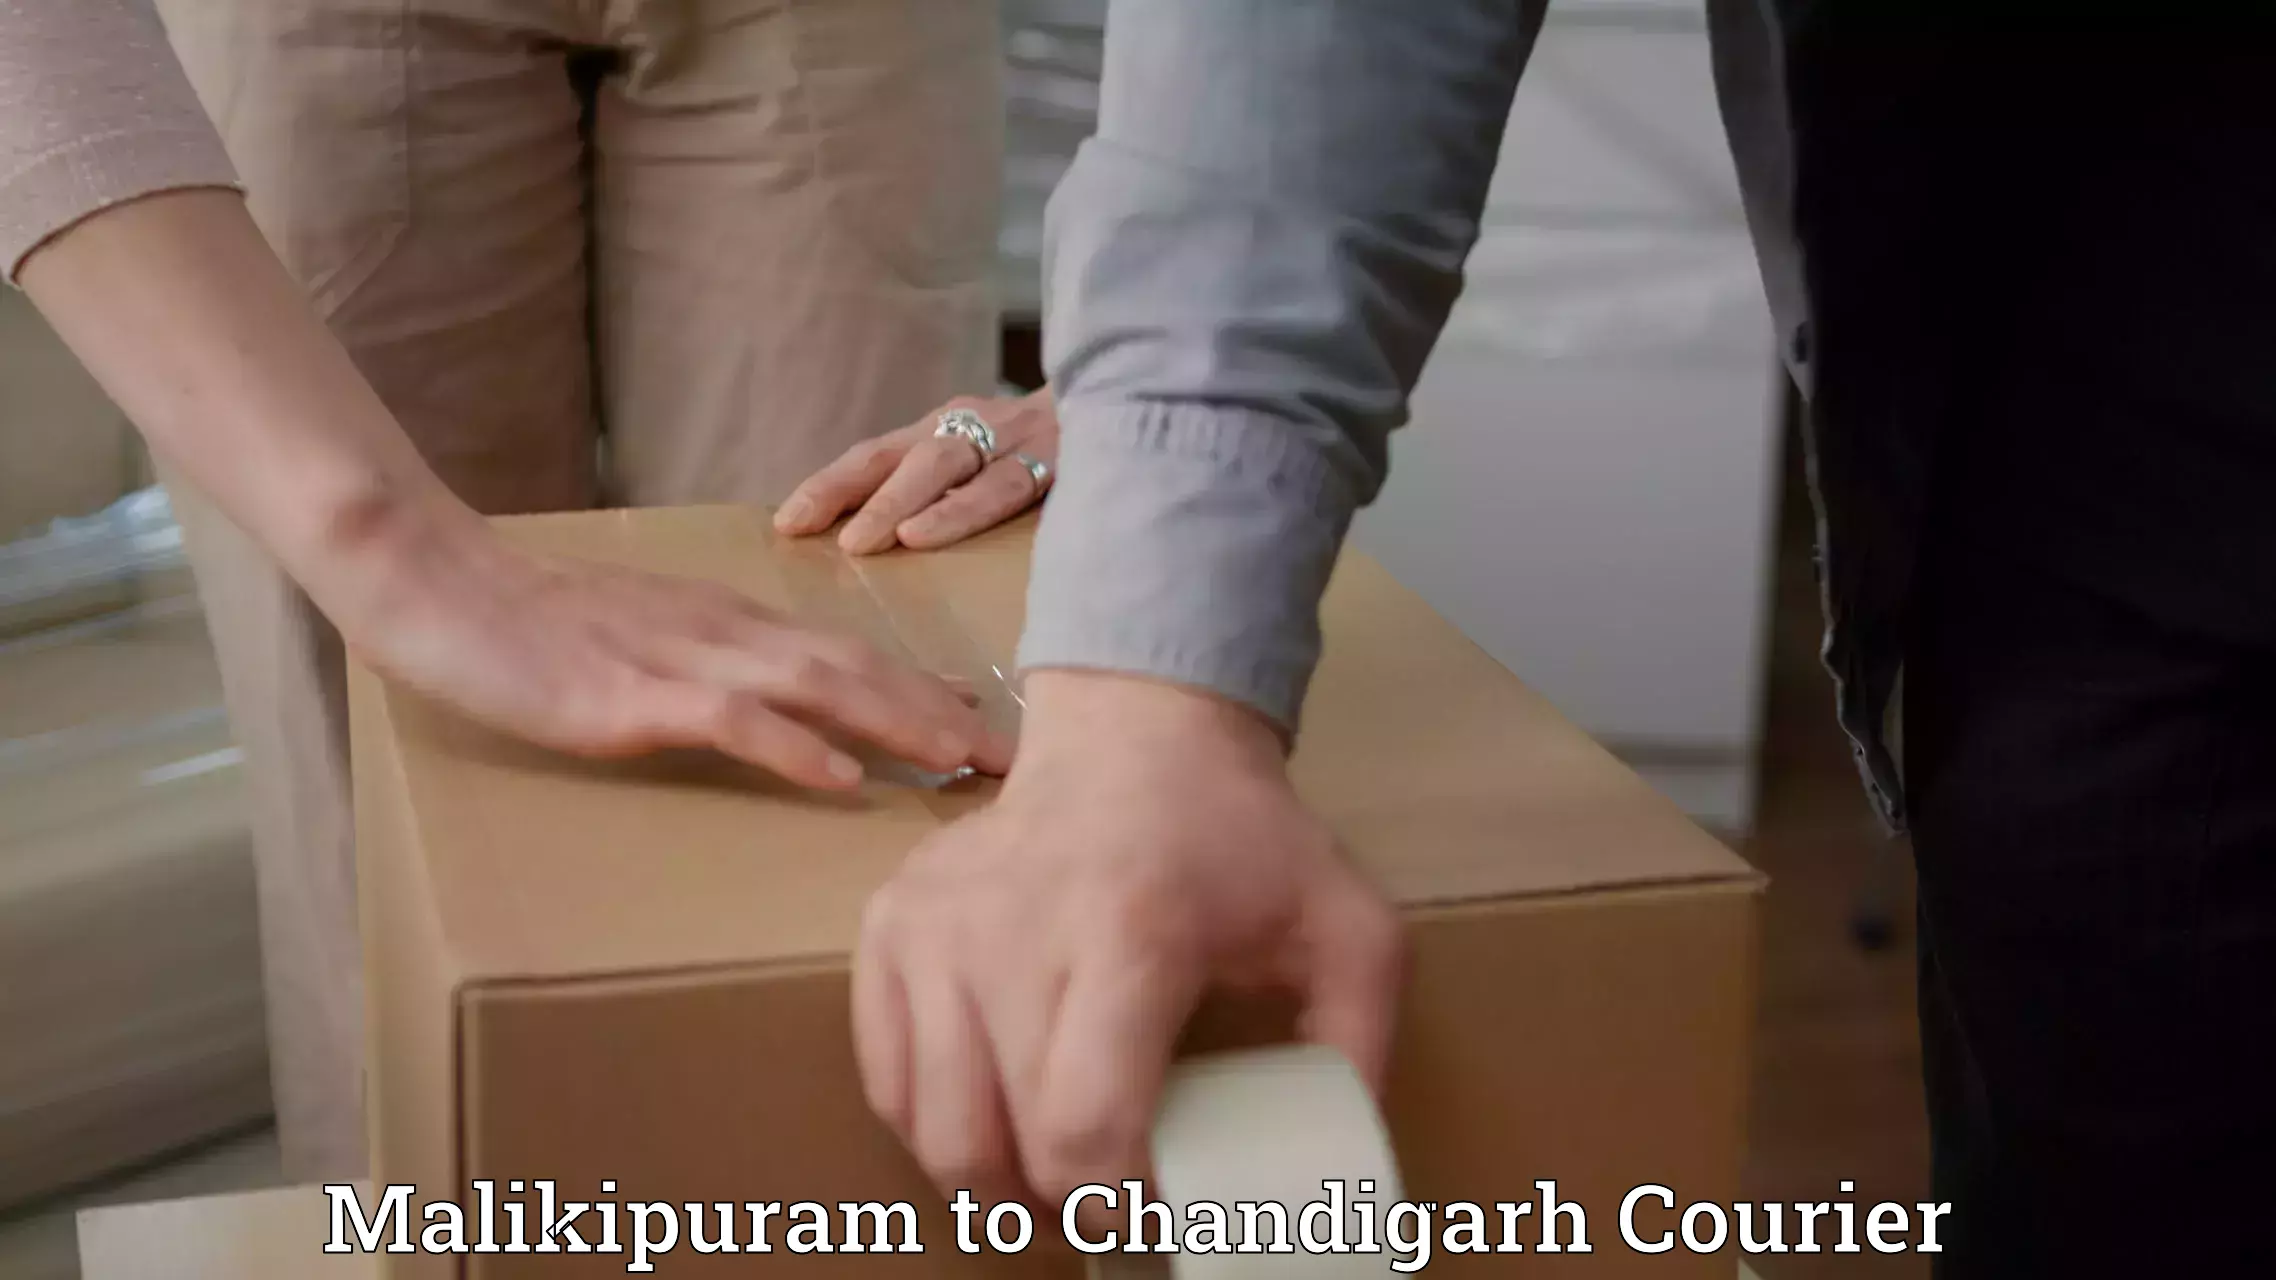 Customizable delivery plans Malikipuram to Chandigarh